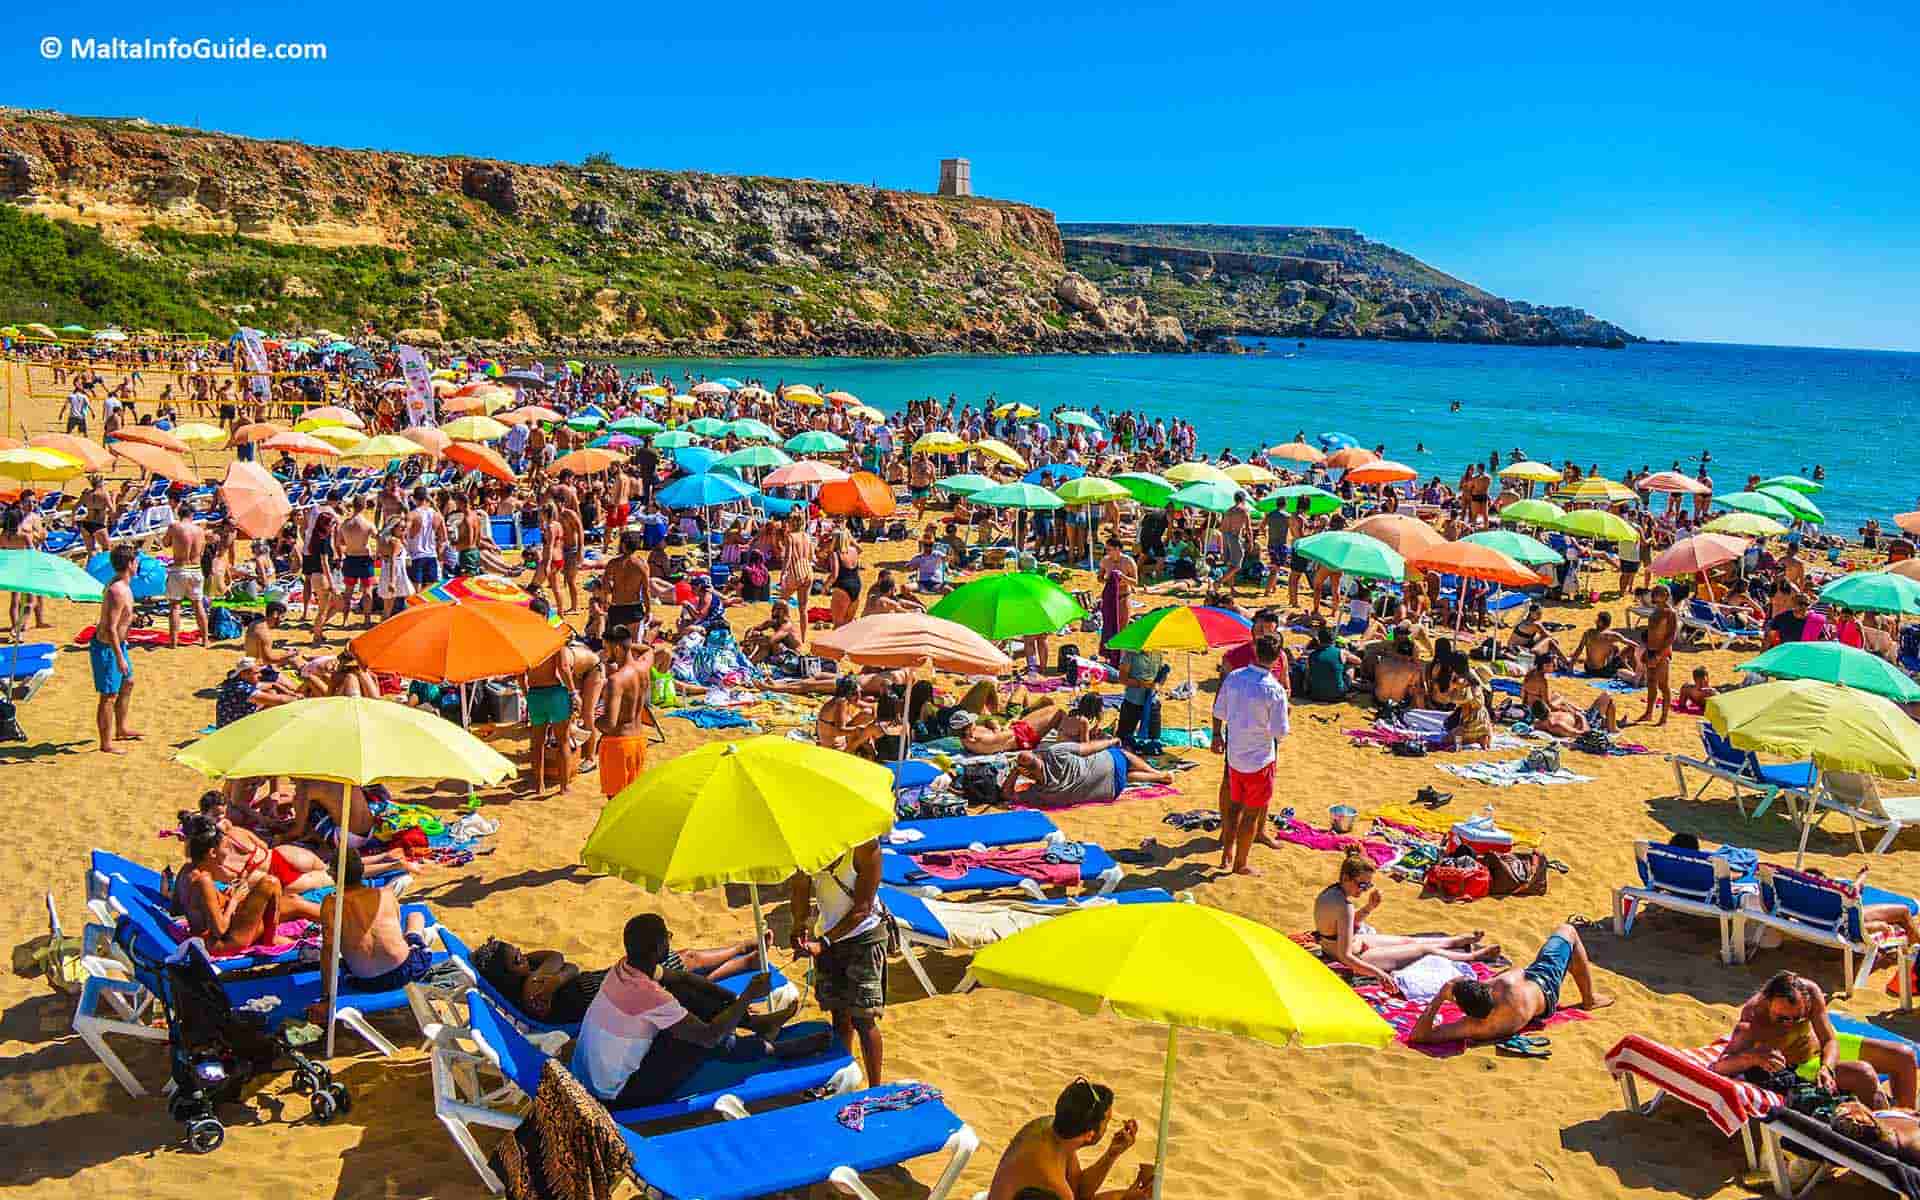 People sunbathing at Golden bay Malta.